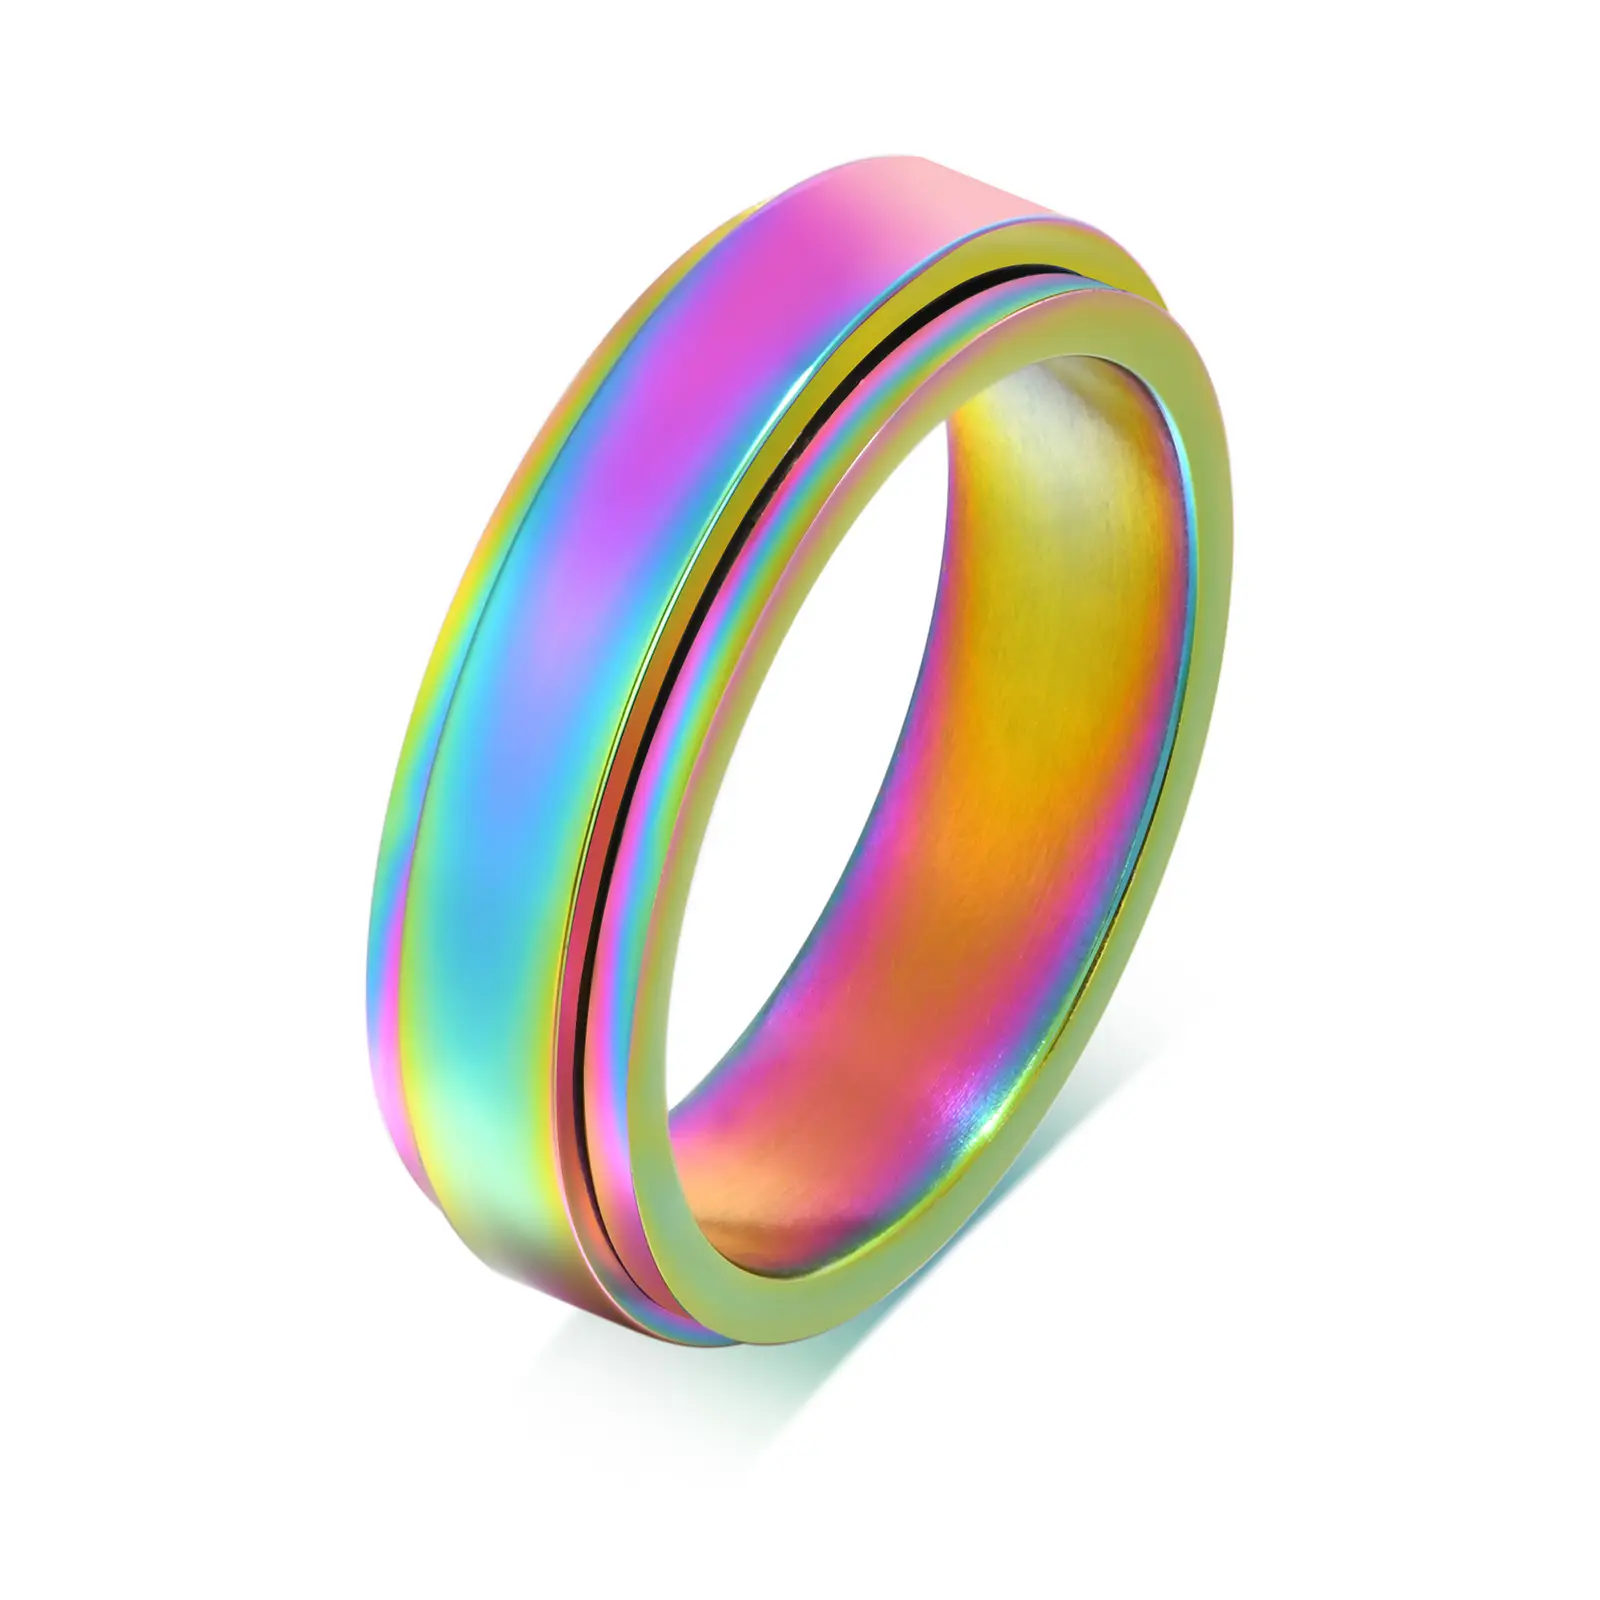 Neuzugang Edelstahl mehrfarbig plattiert farbwechsel Regenbogen-Eversprecher-Ring für Paare Männer Frauen